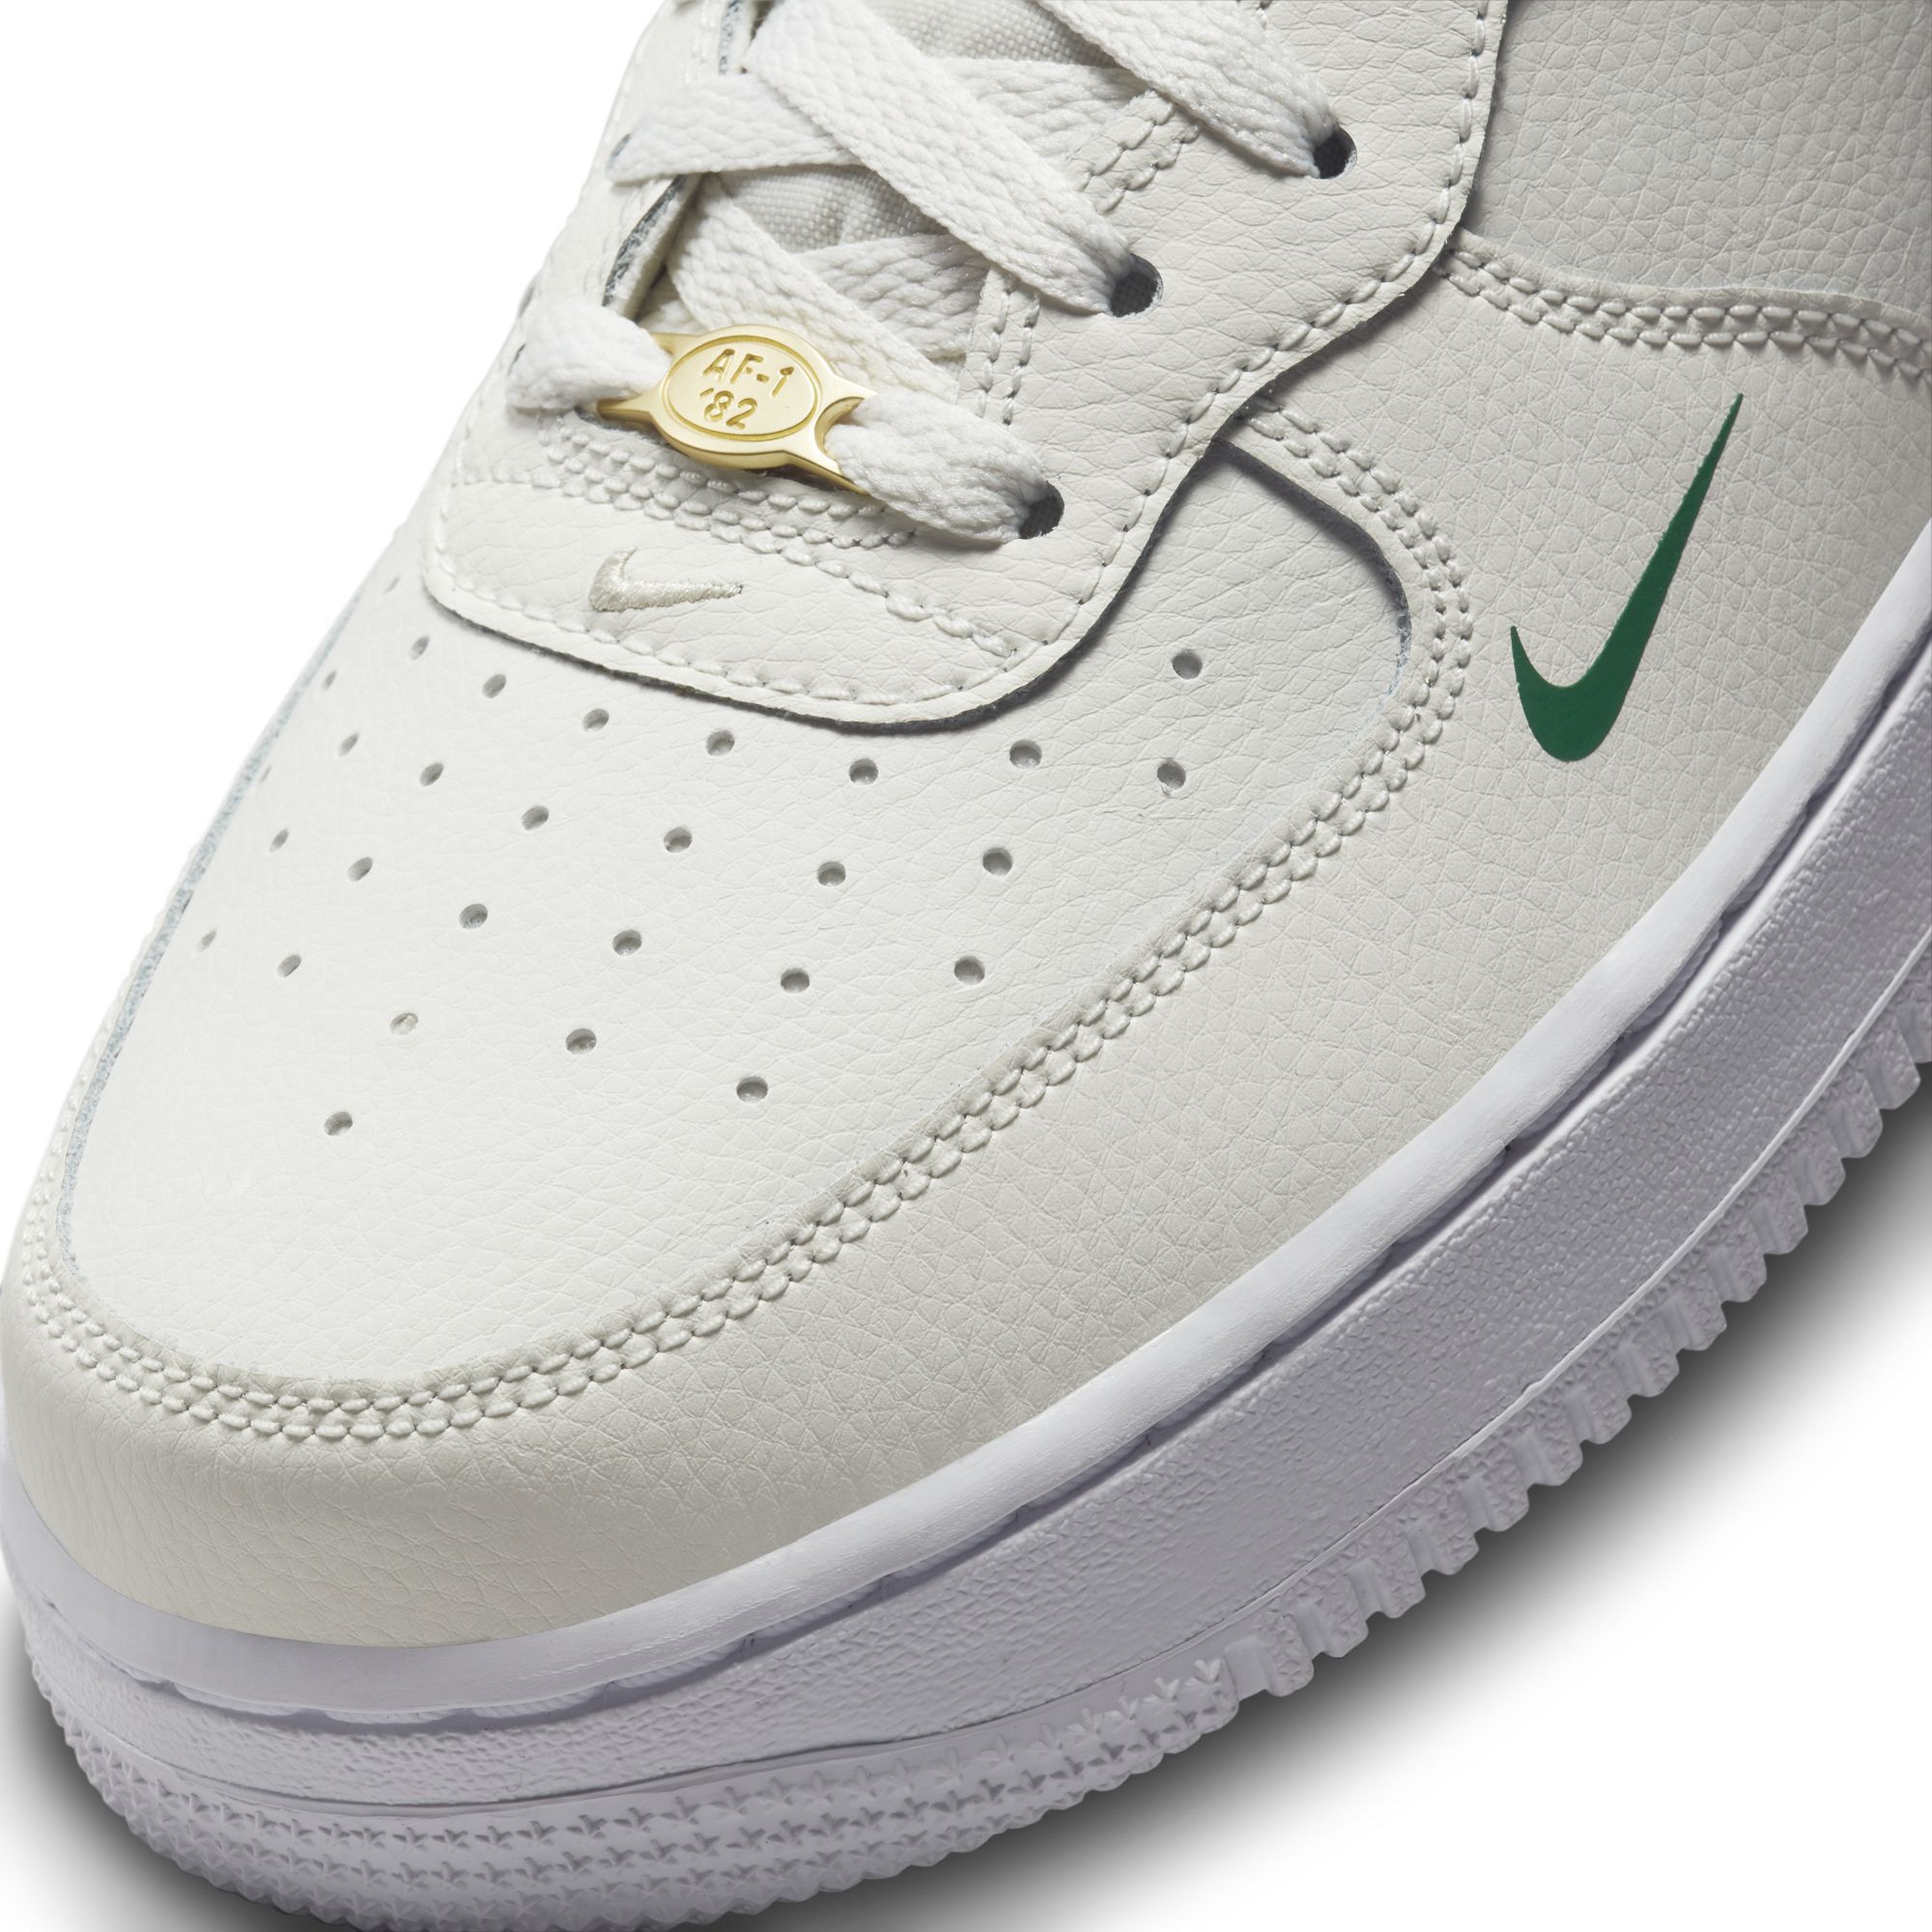 Nike Air Force 1 07 LV8 Wave Sail White/Black Walking Shoes DM0117-100 Men  14 